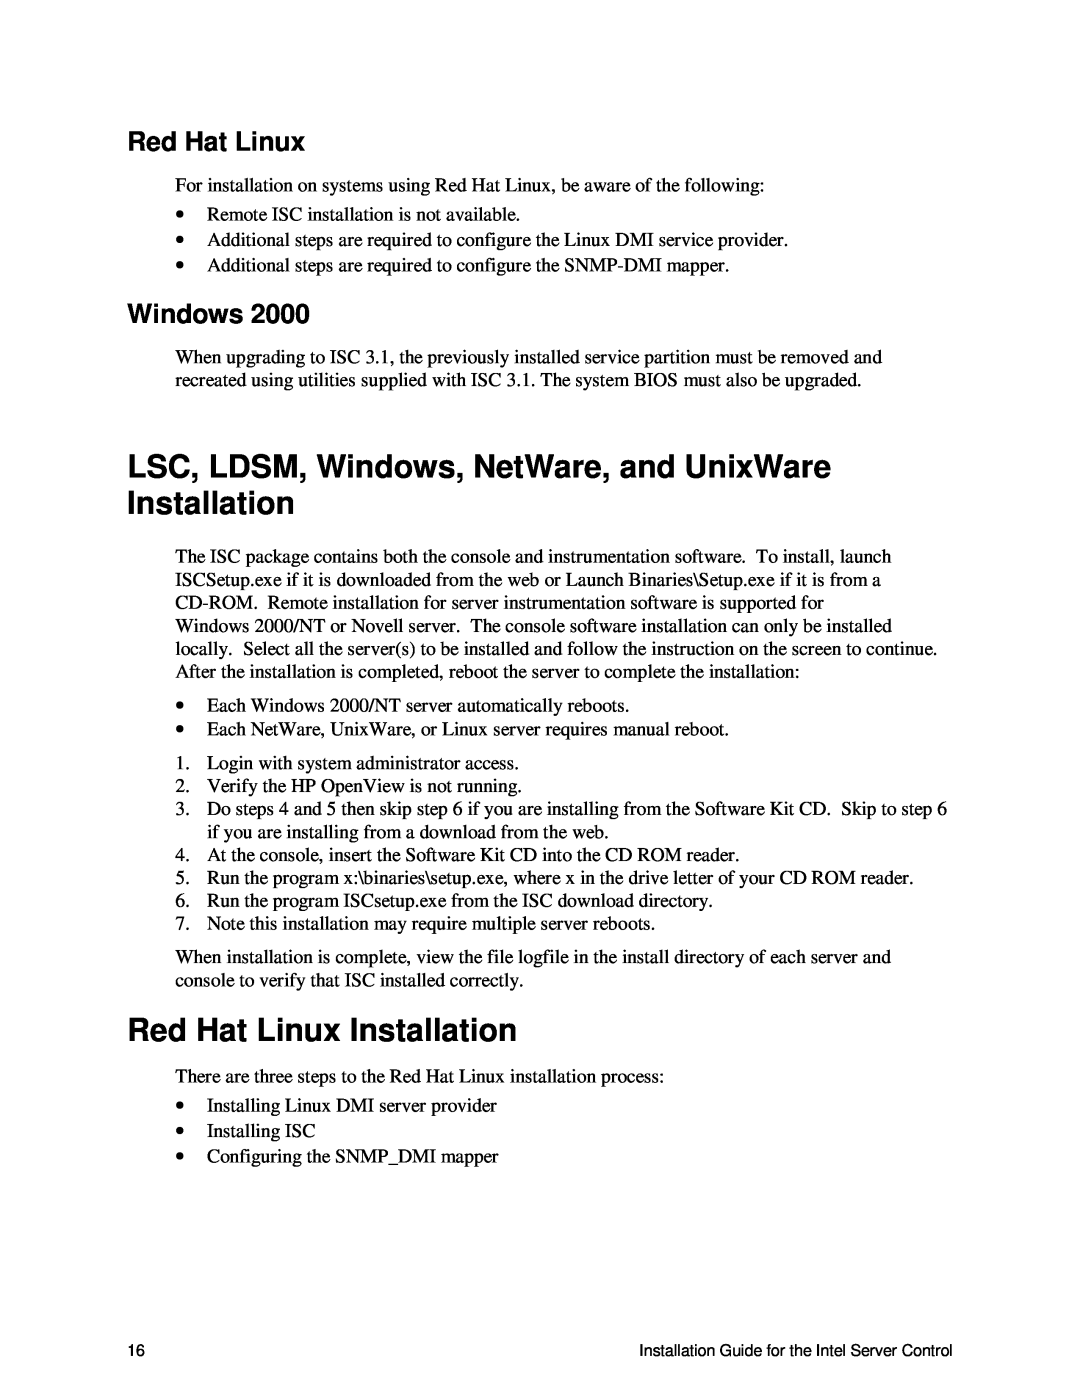 Intel 747116-011 manual Red Hat Linux Installation, Windows 